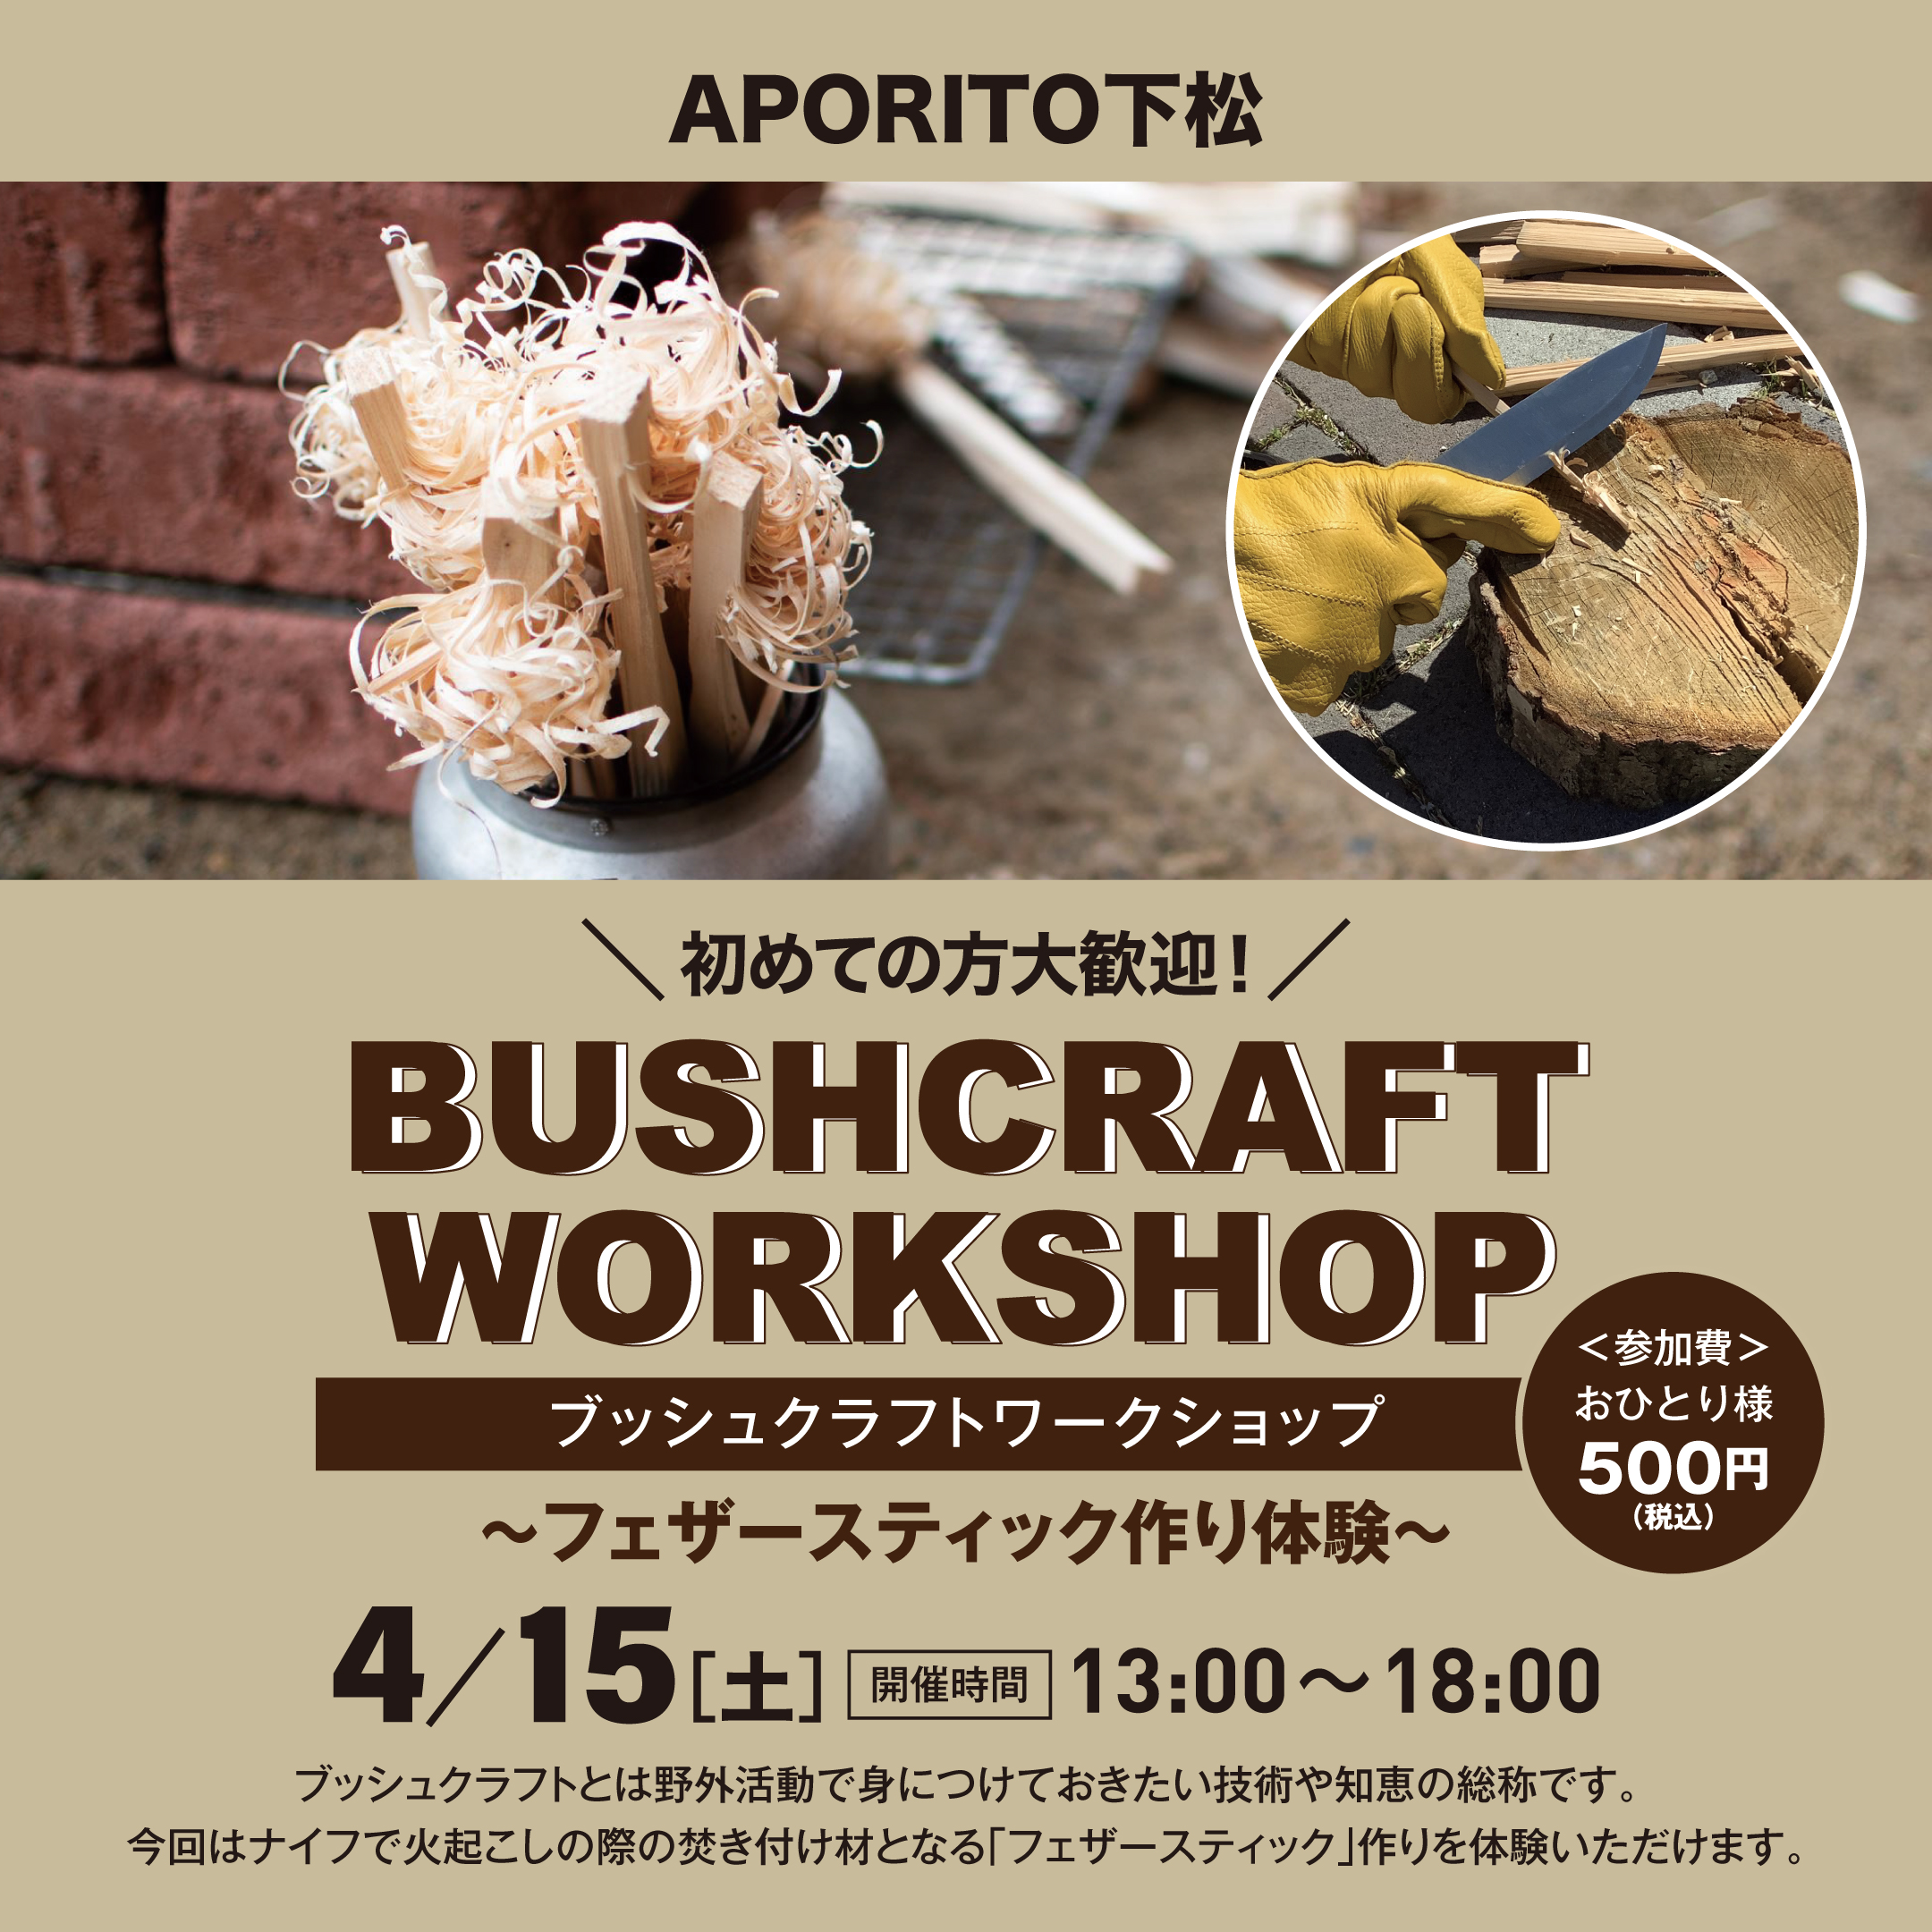 kudamatsu_bushcraft-workshop_2160 (1)